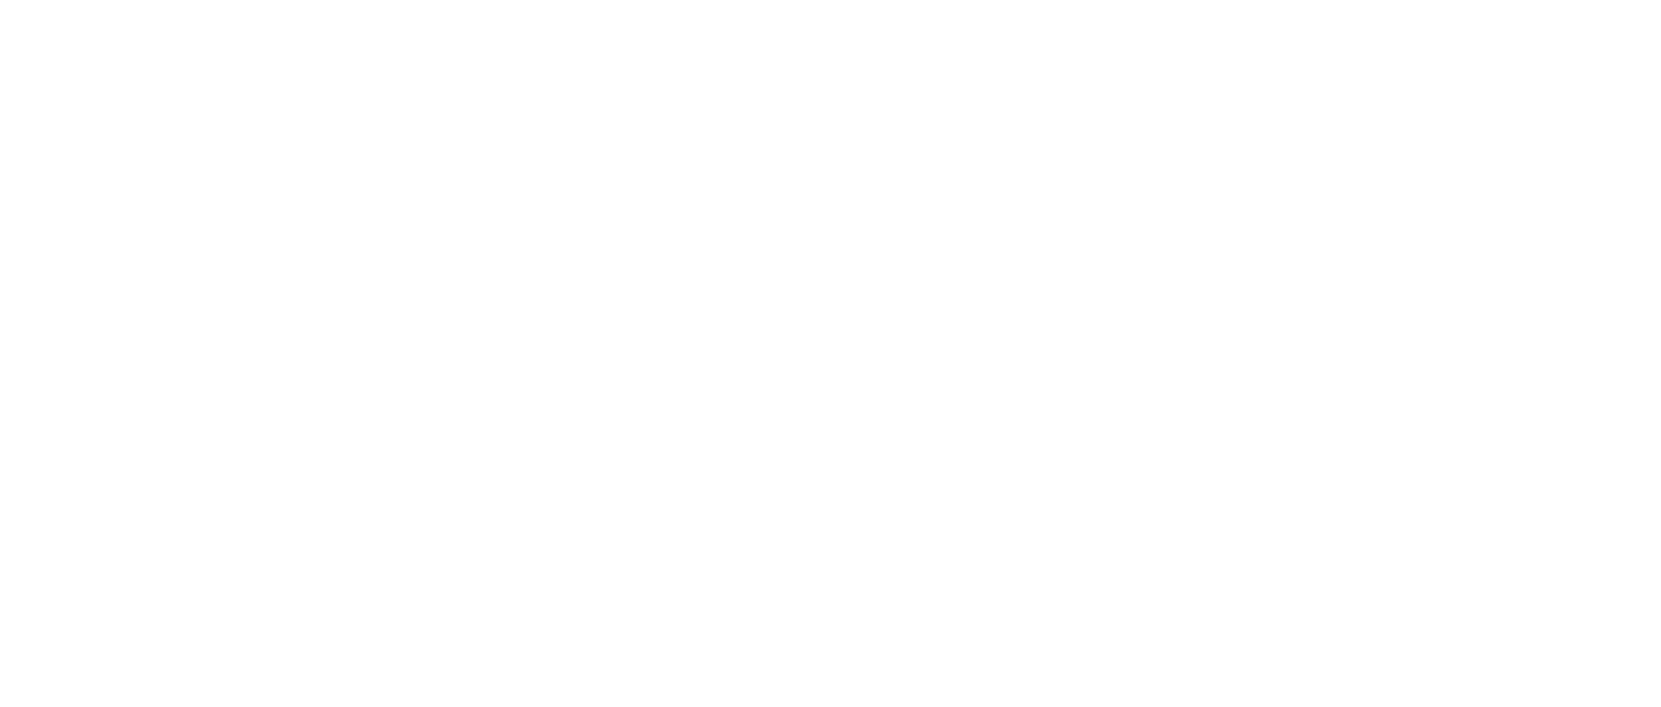 MCAST logo